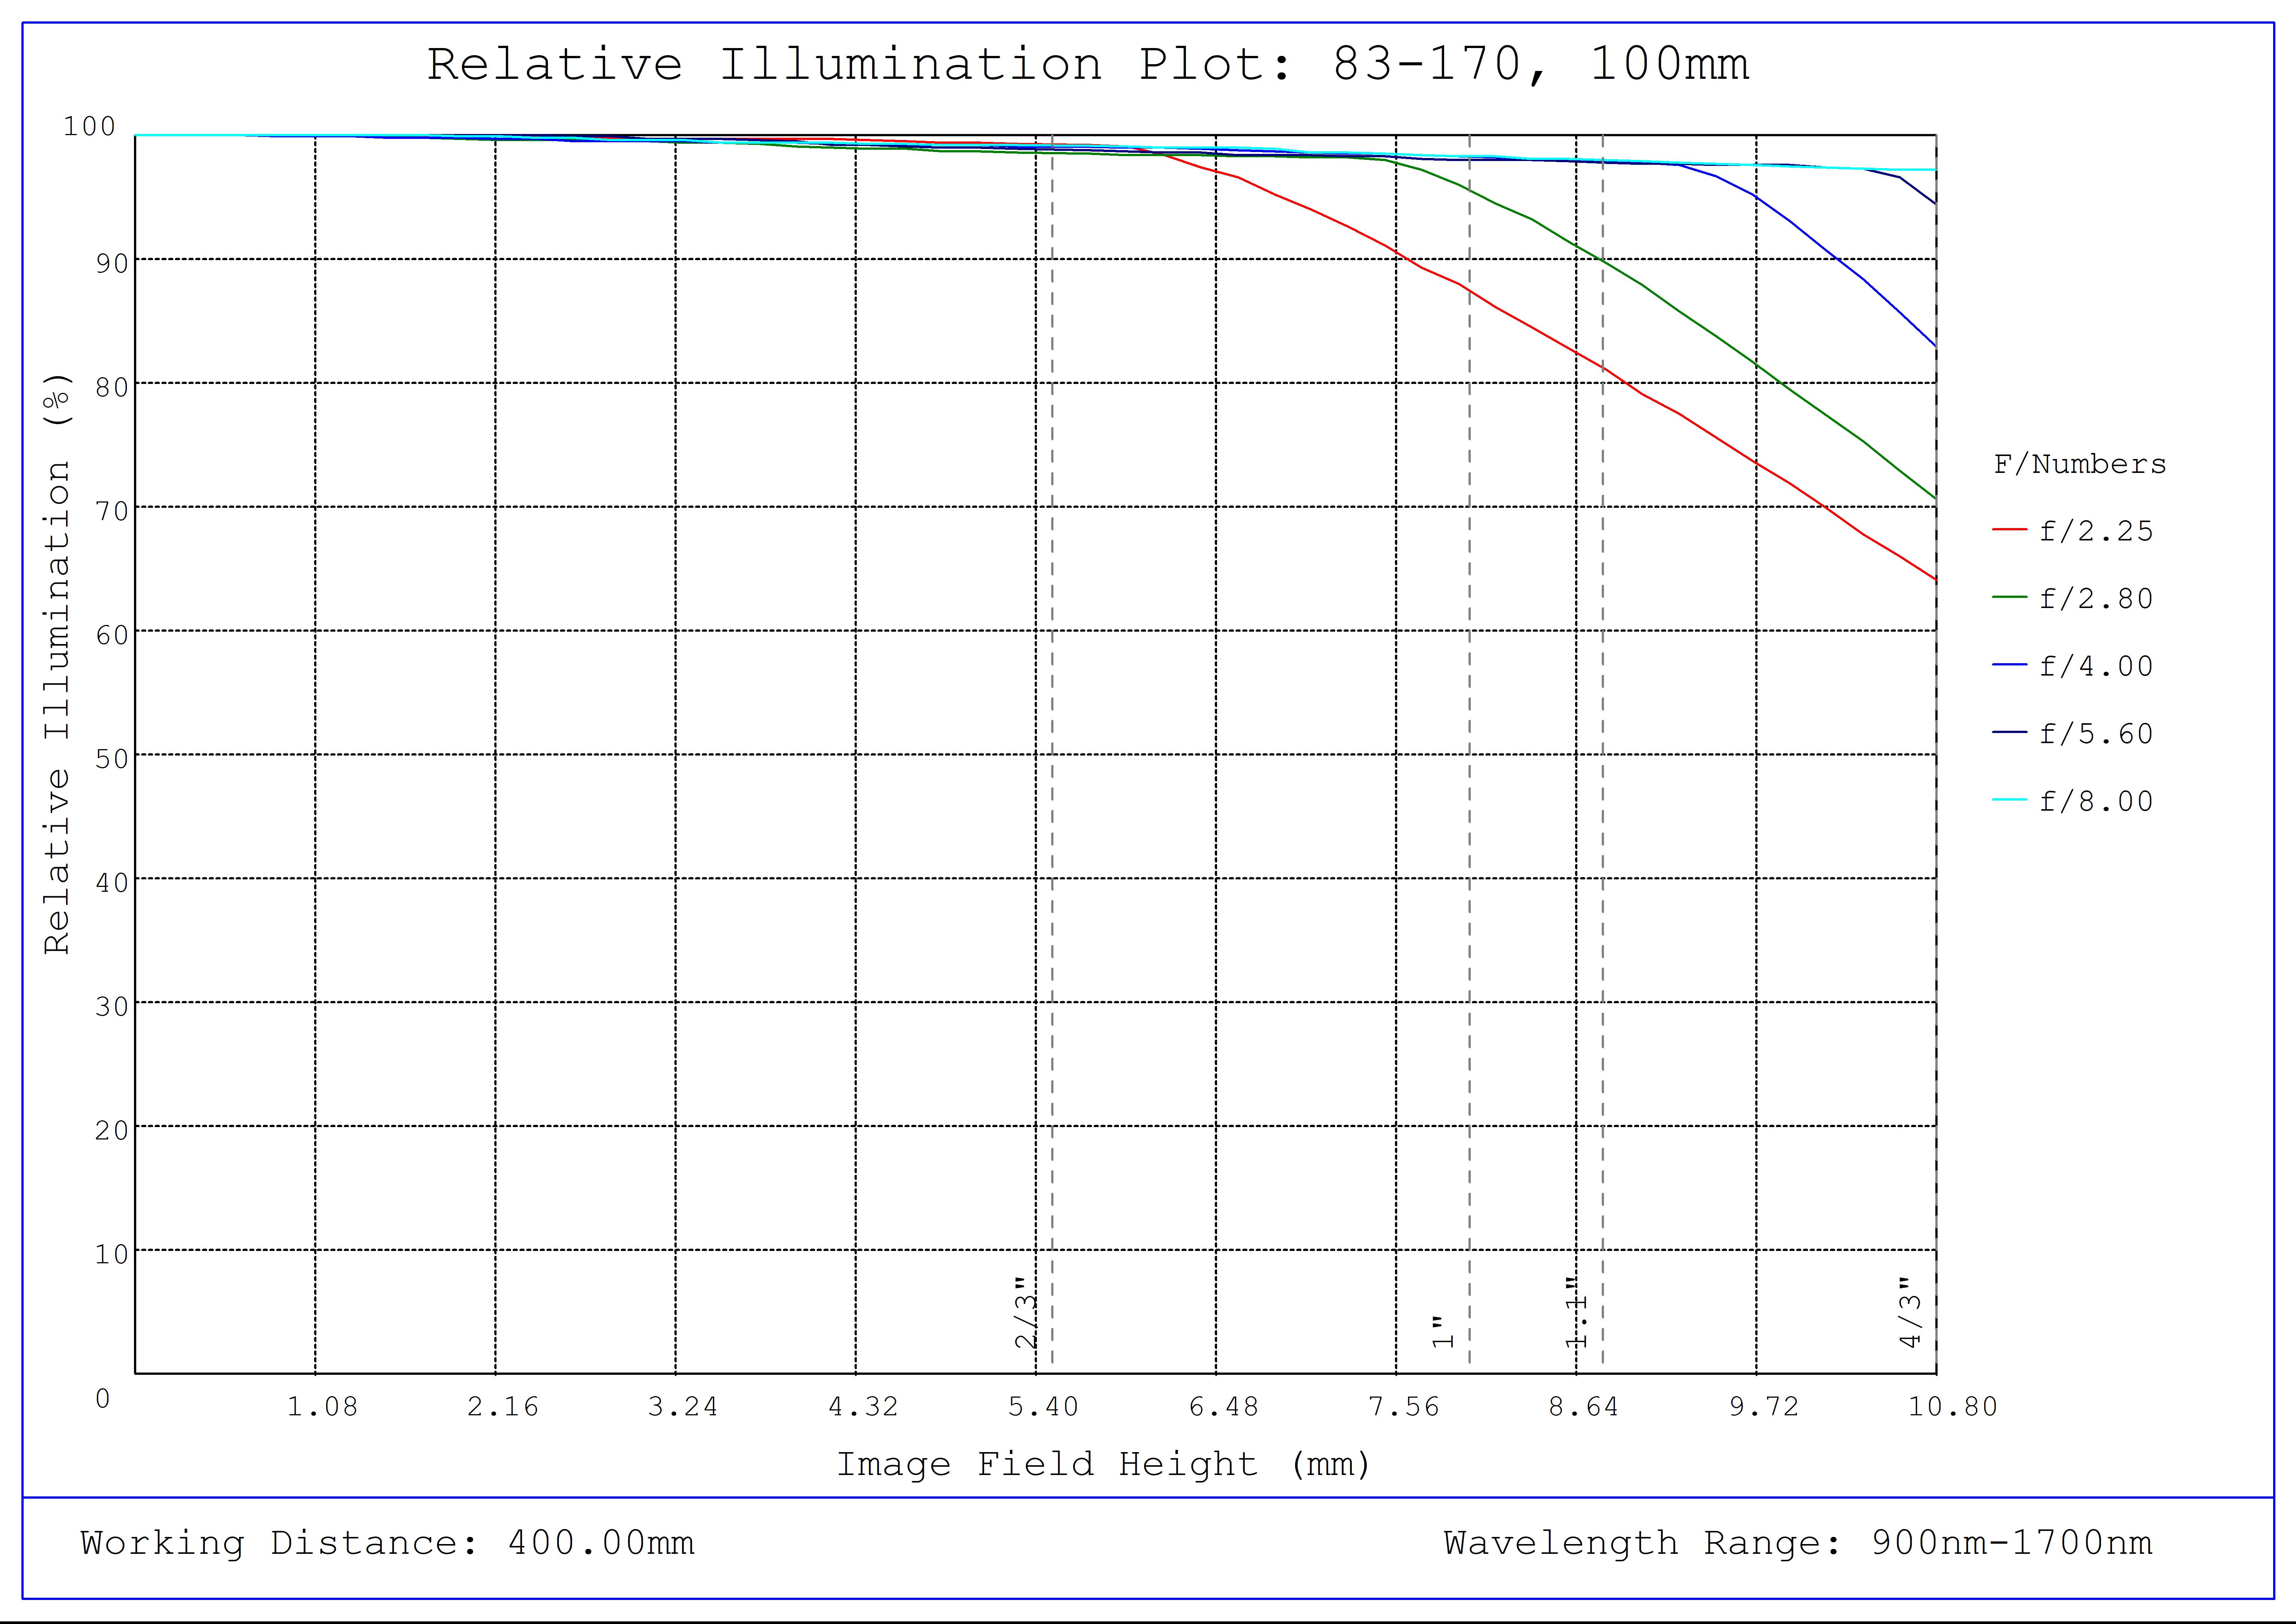 #83-170, 100mm SWIR Series Fixed Focal Length Lens, C-Mount, Relative Illumination Plot